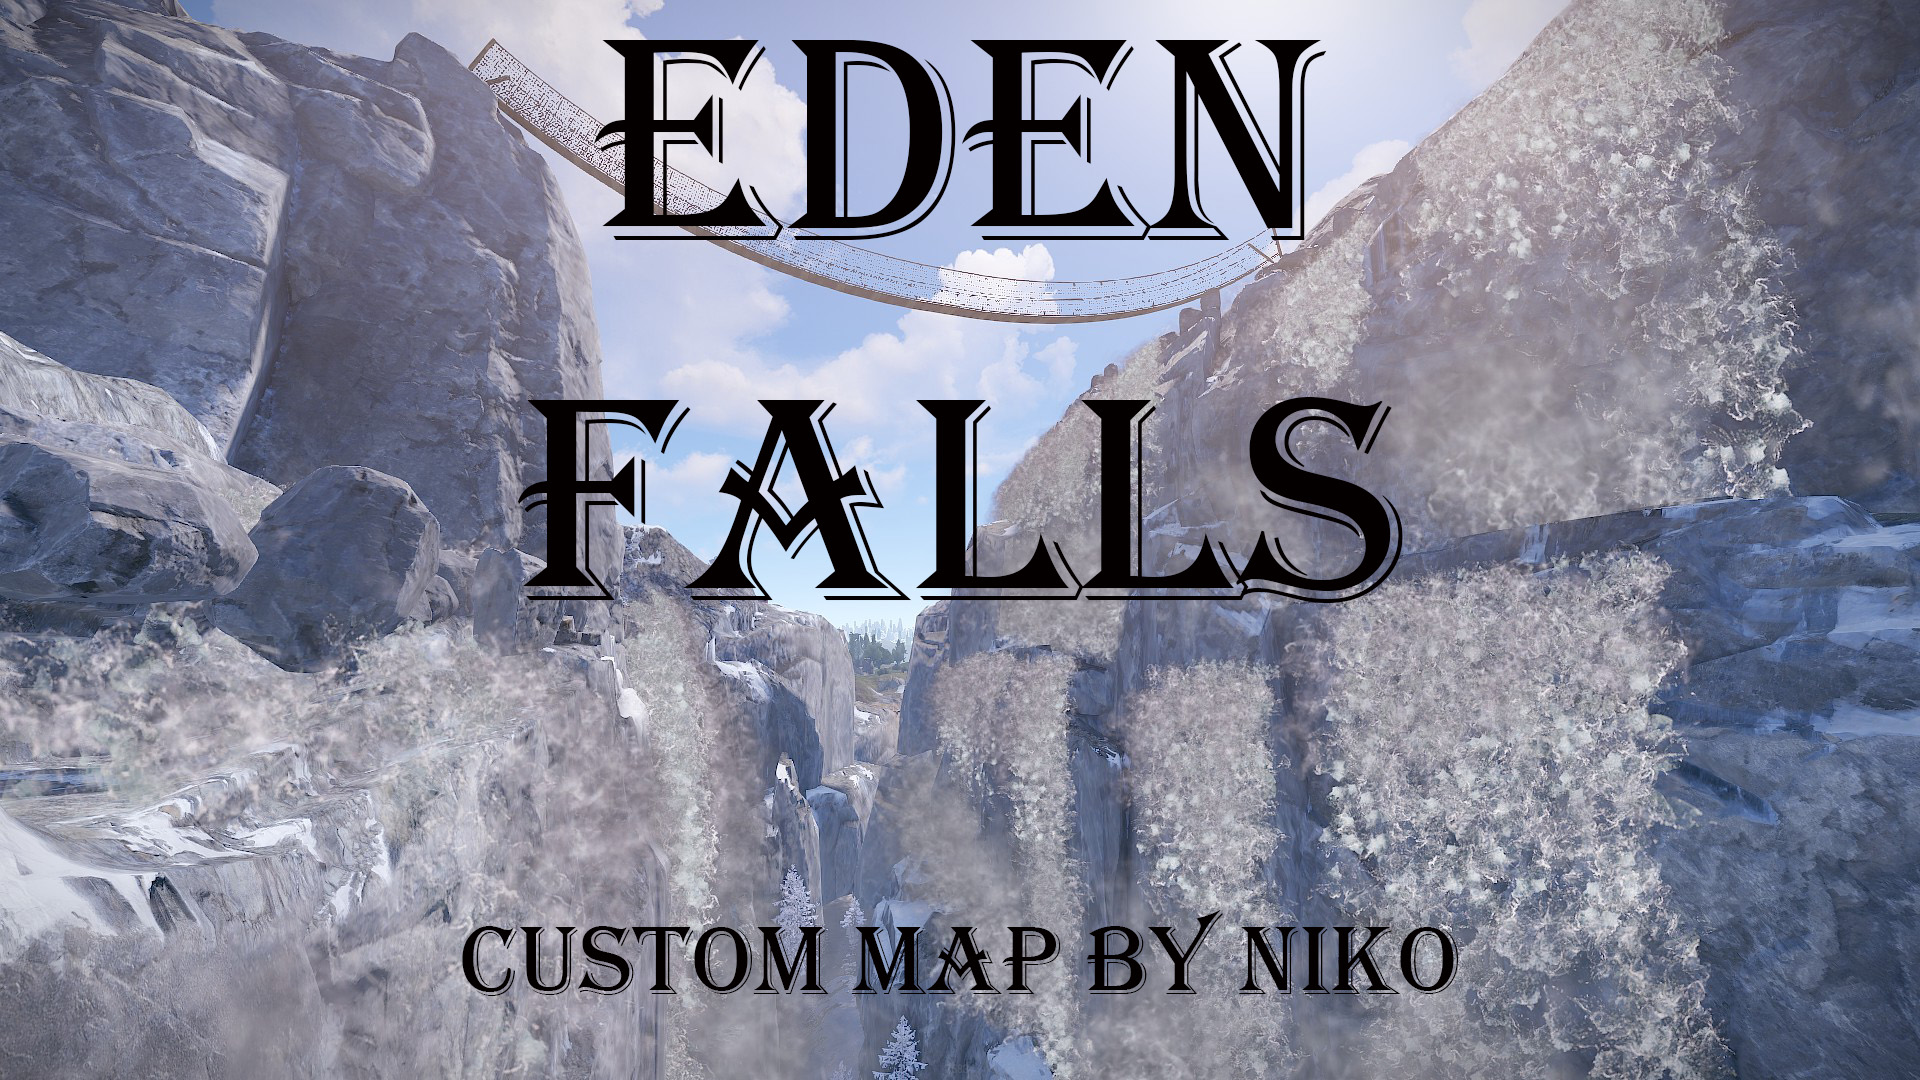 Eden Falls Custom Map by Niko